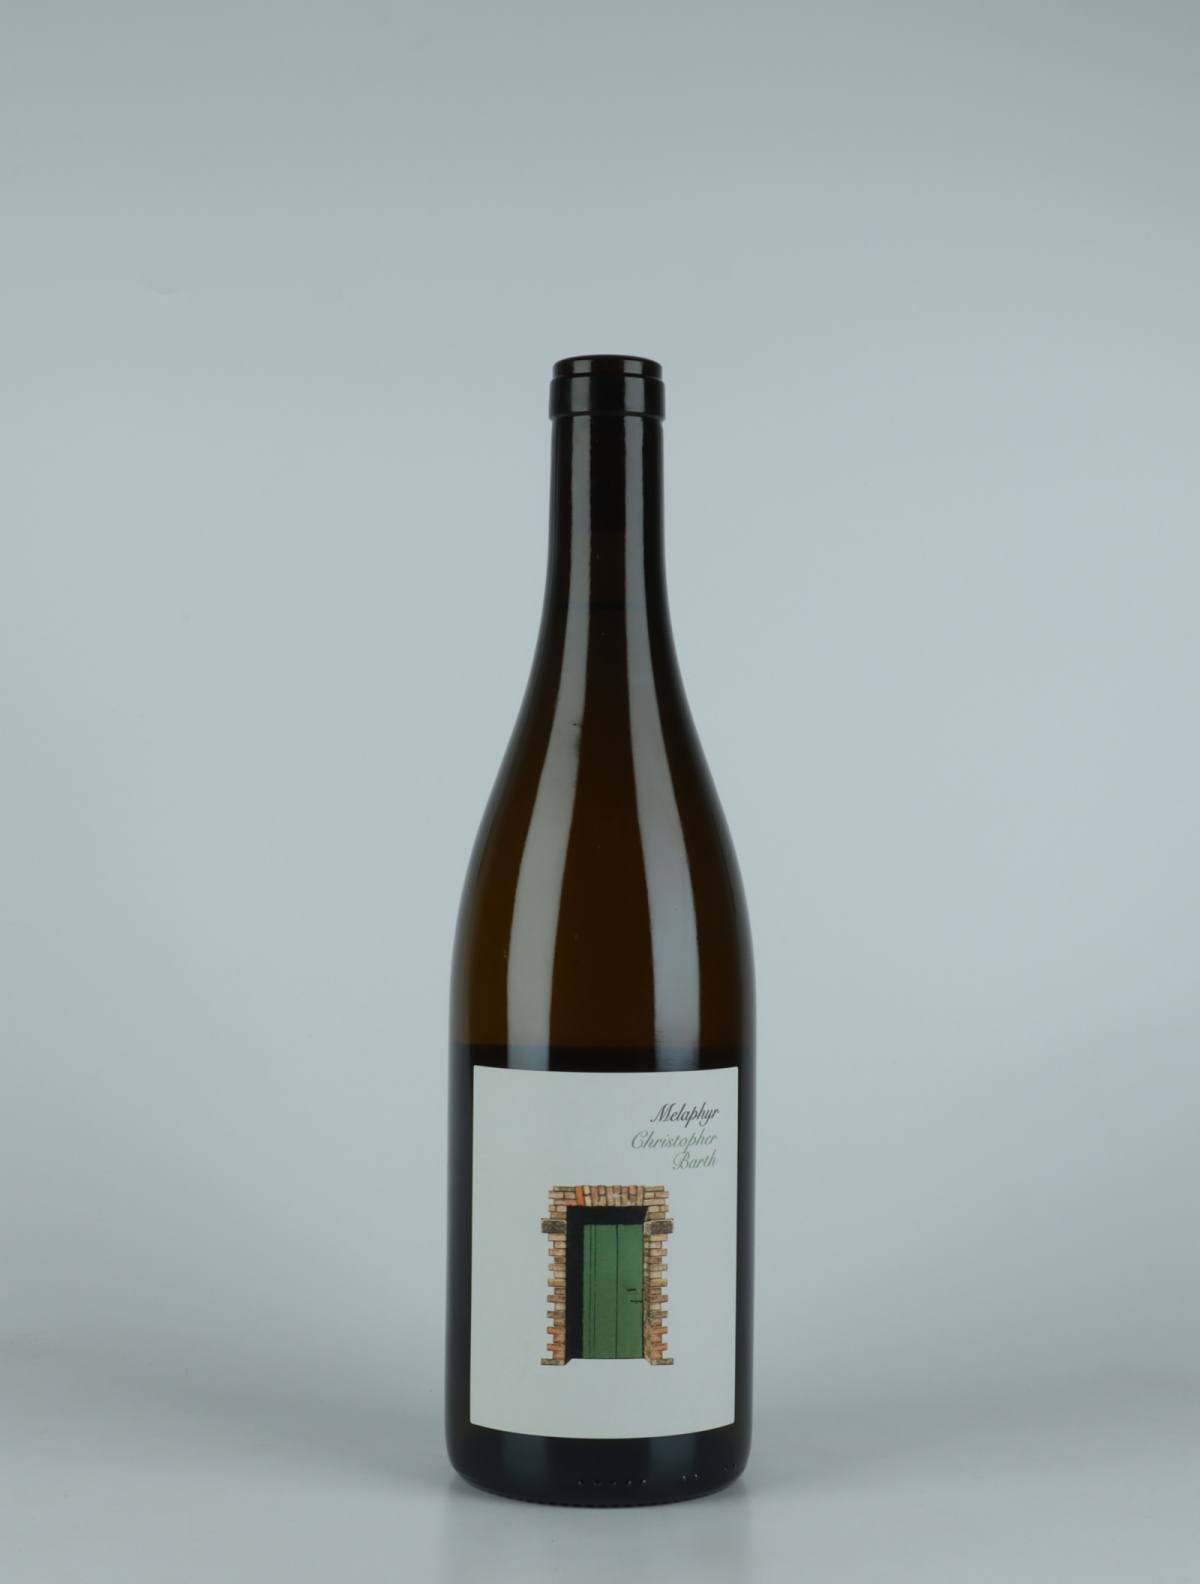 A bottle 2020 Melaphyr Riesling White wine from , Rheinhessen in Germany